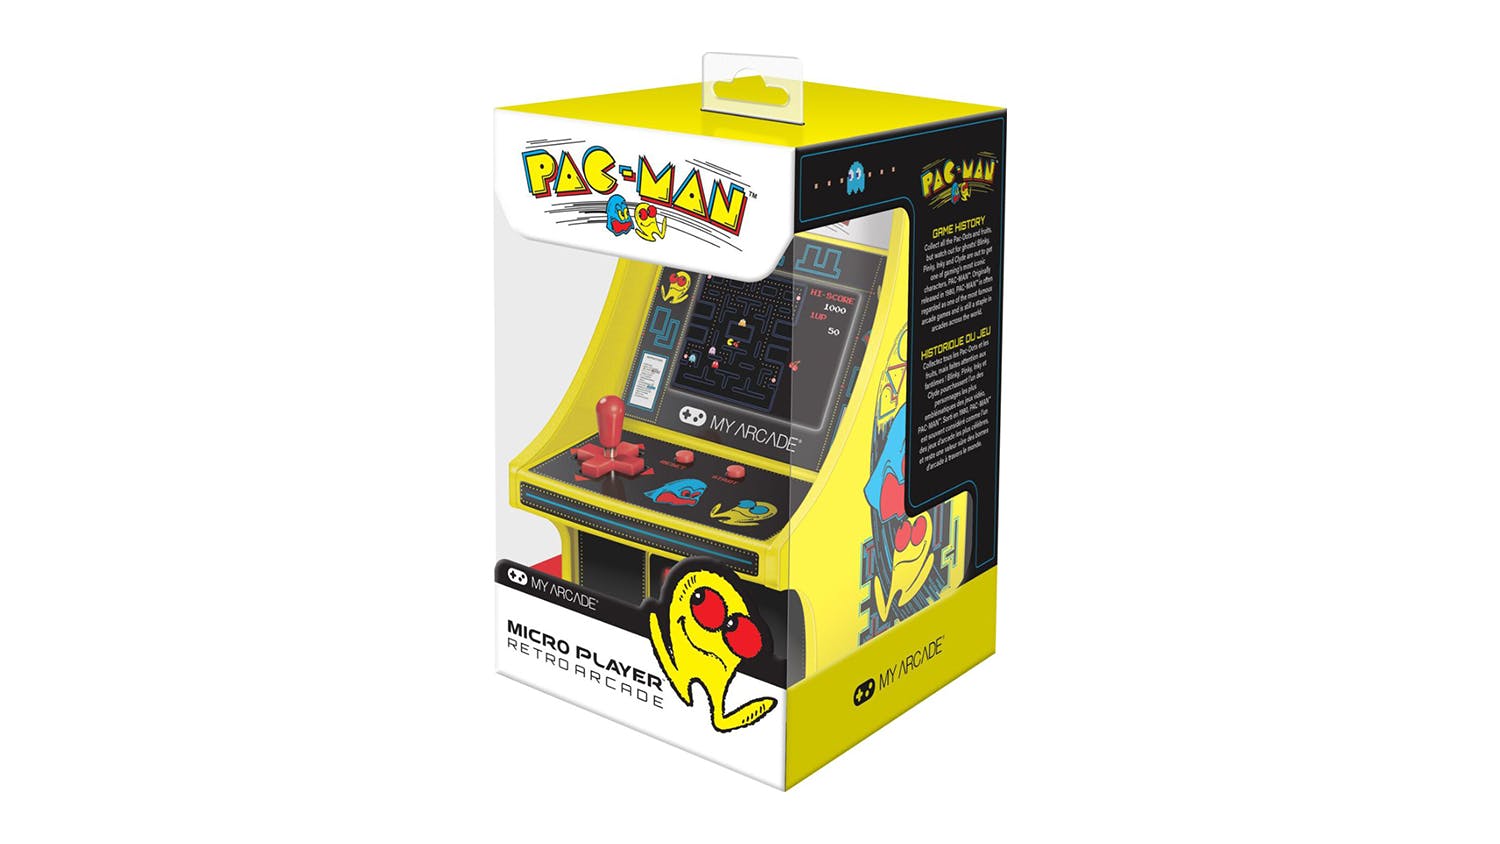 My Arcade Micro Player - Pac-Man